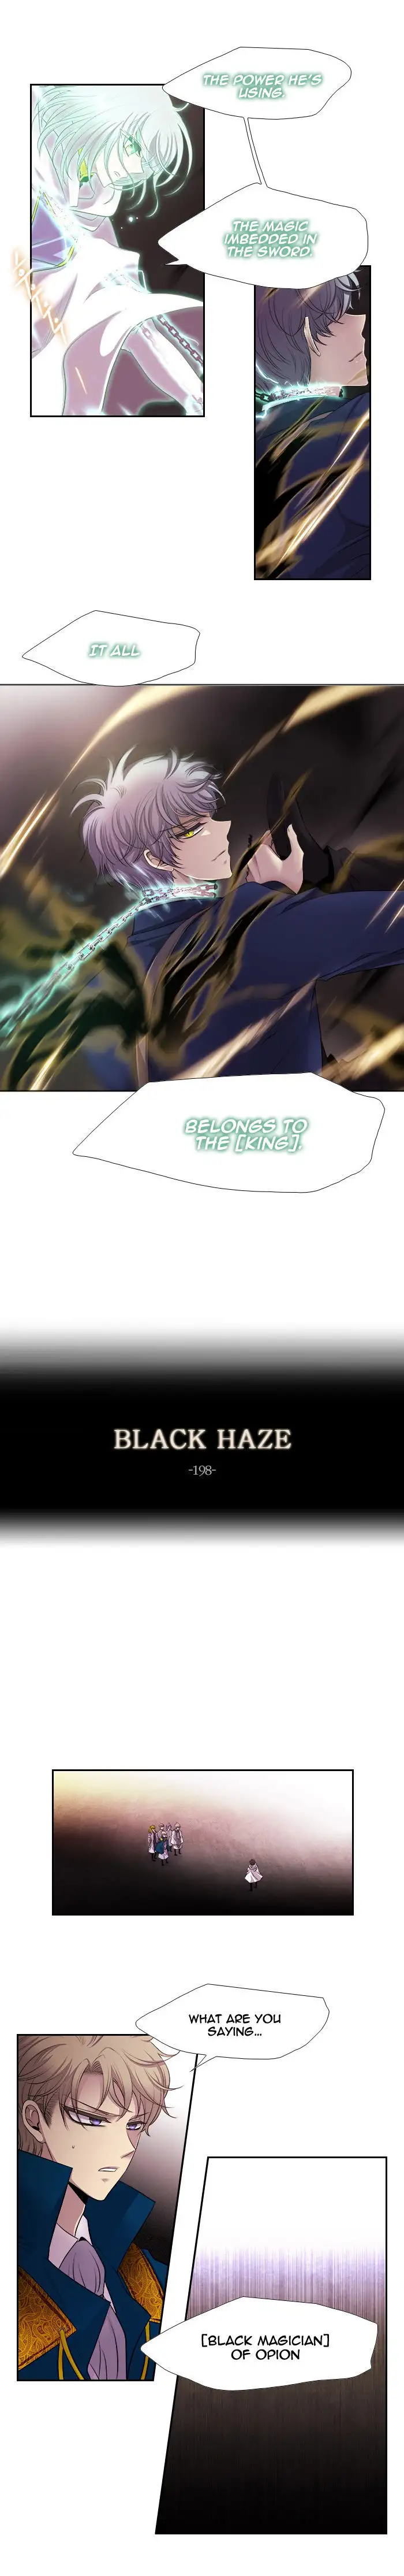 Black Haze - Chapter 198 Page 5